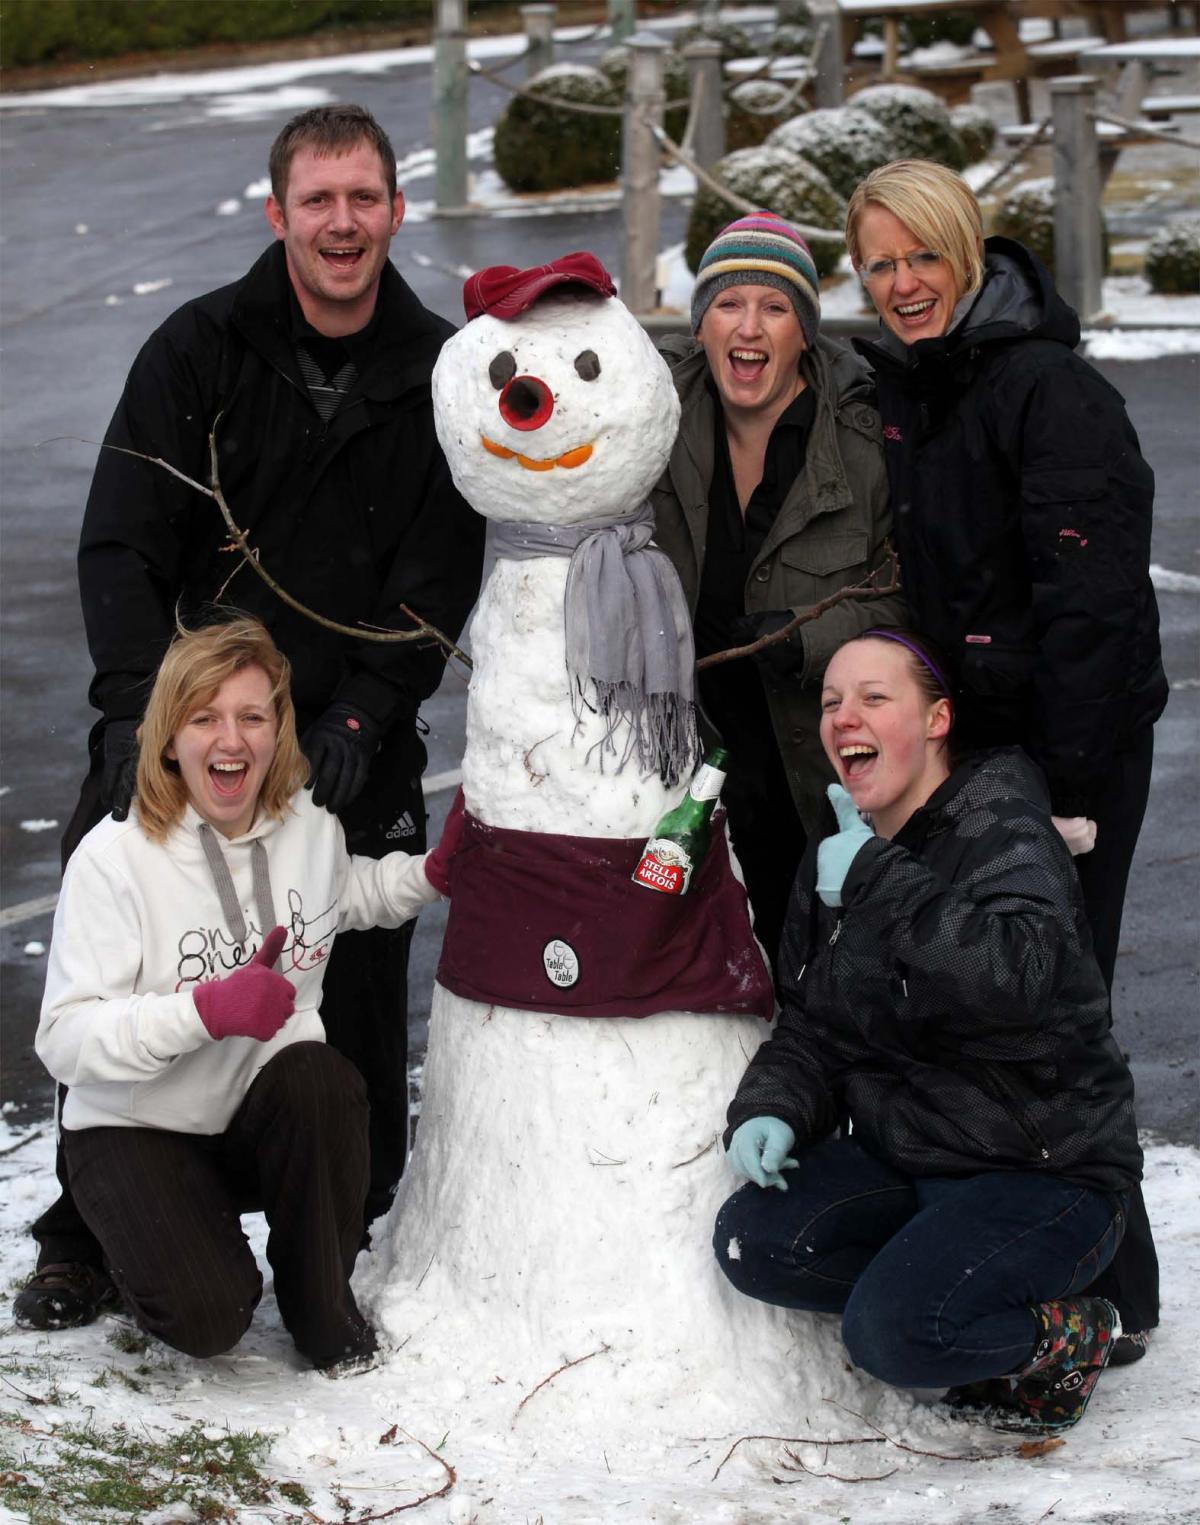 Staff at The Heath pub in Dibden Purlieu make a snowman